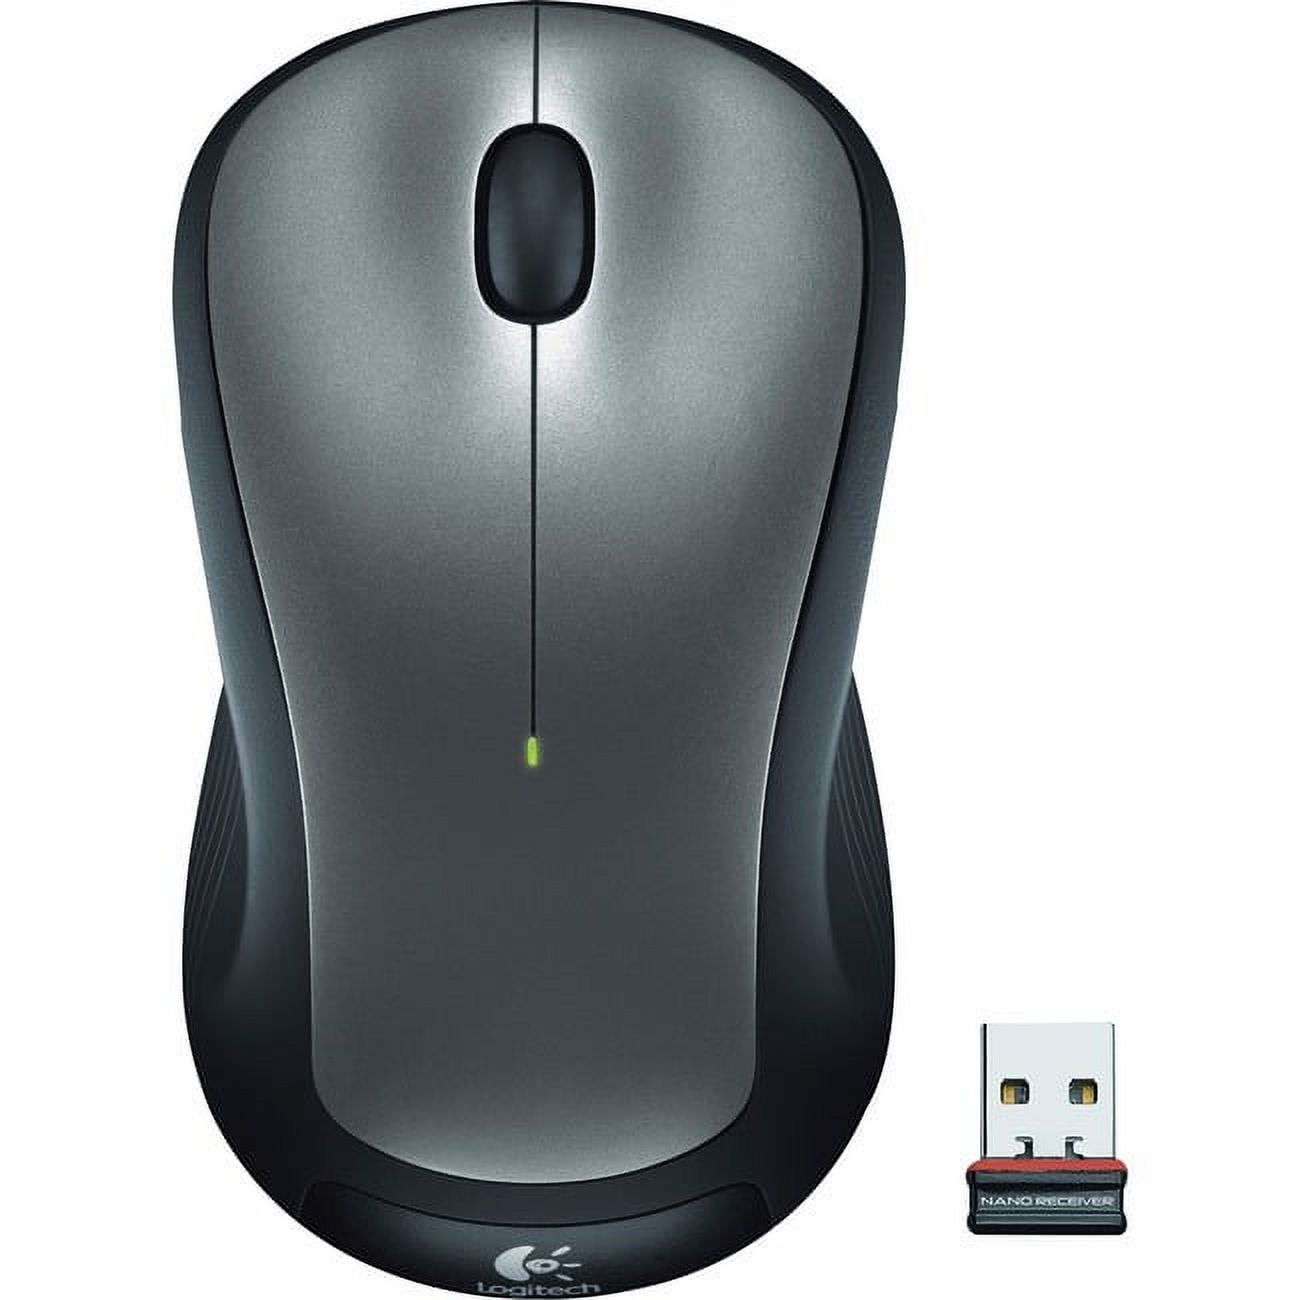 Logitech Wireless Mouse M310 - image 2 of 2